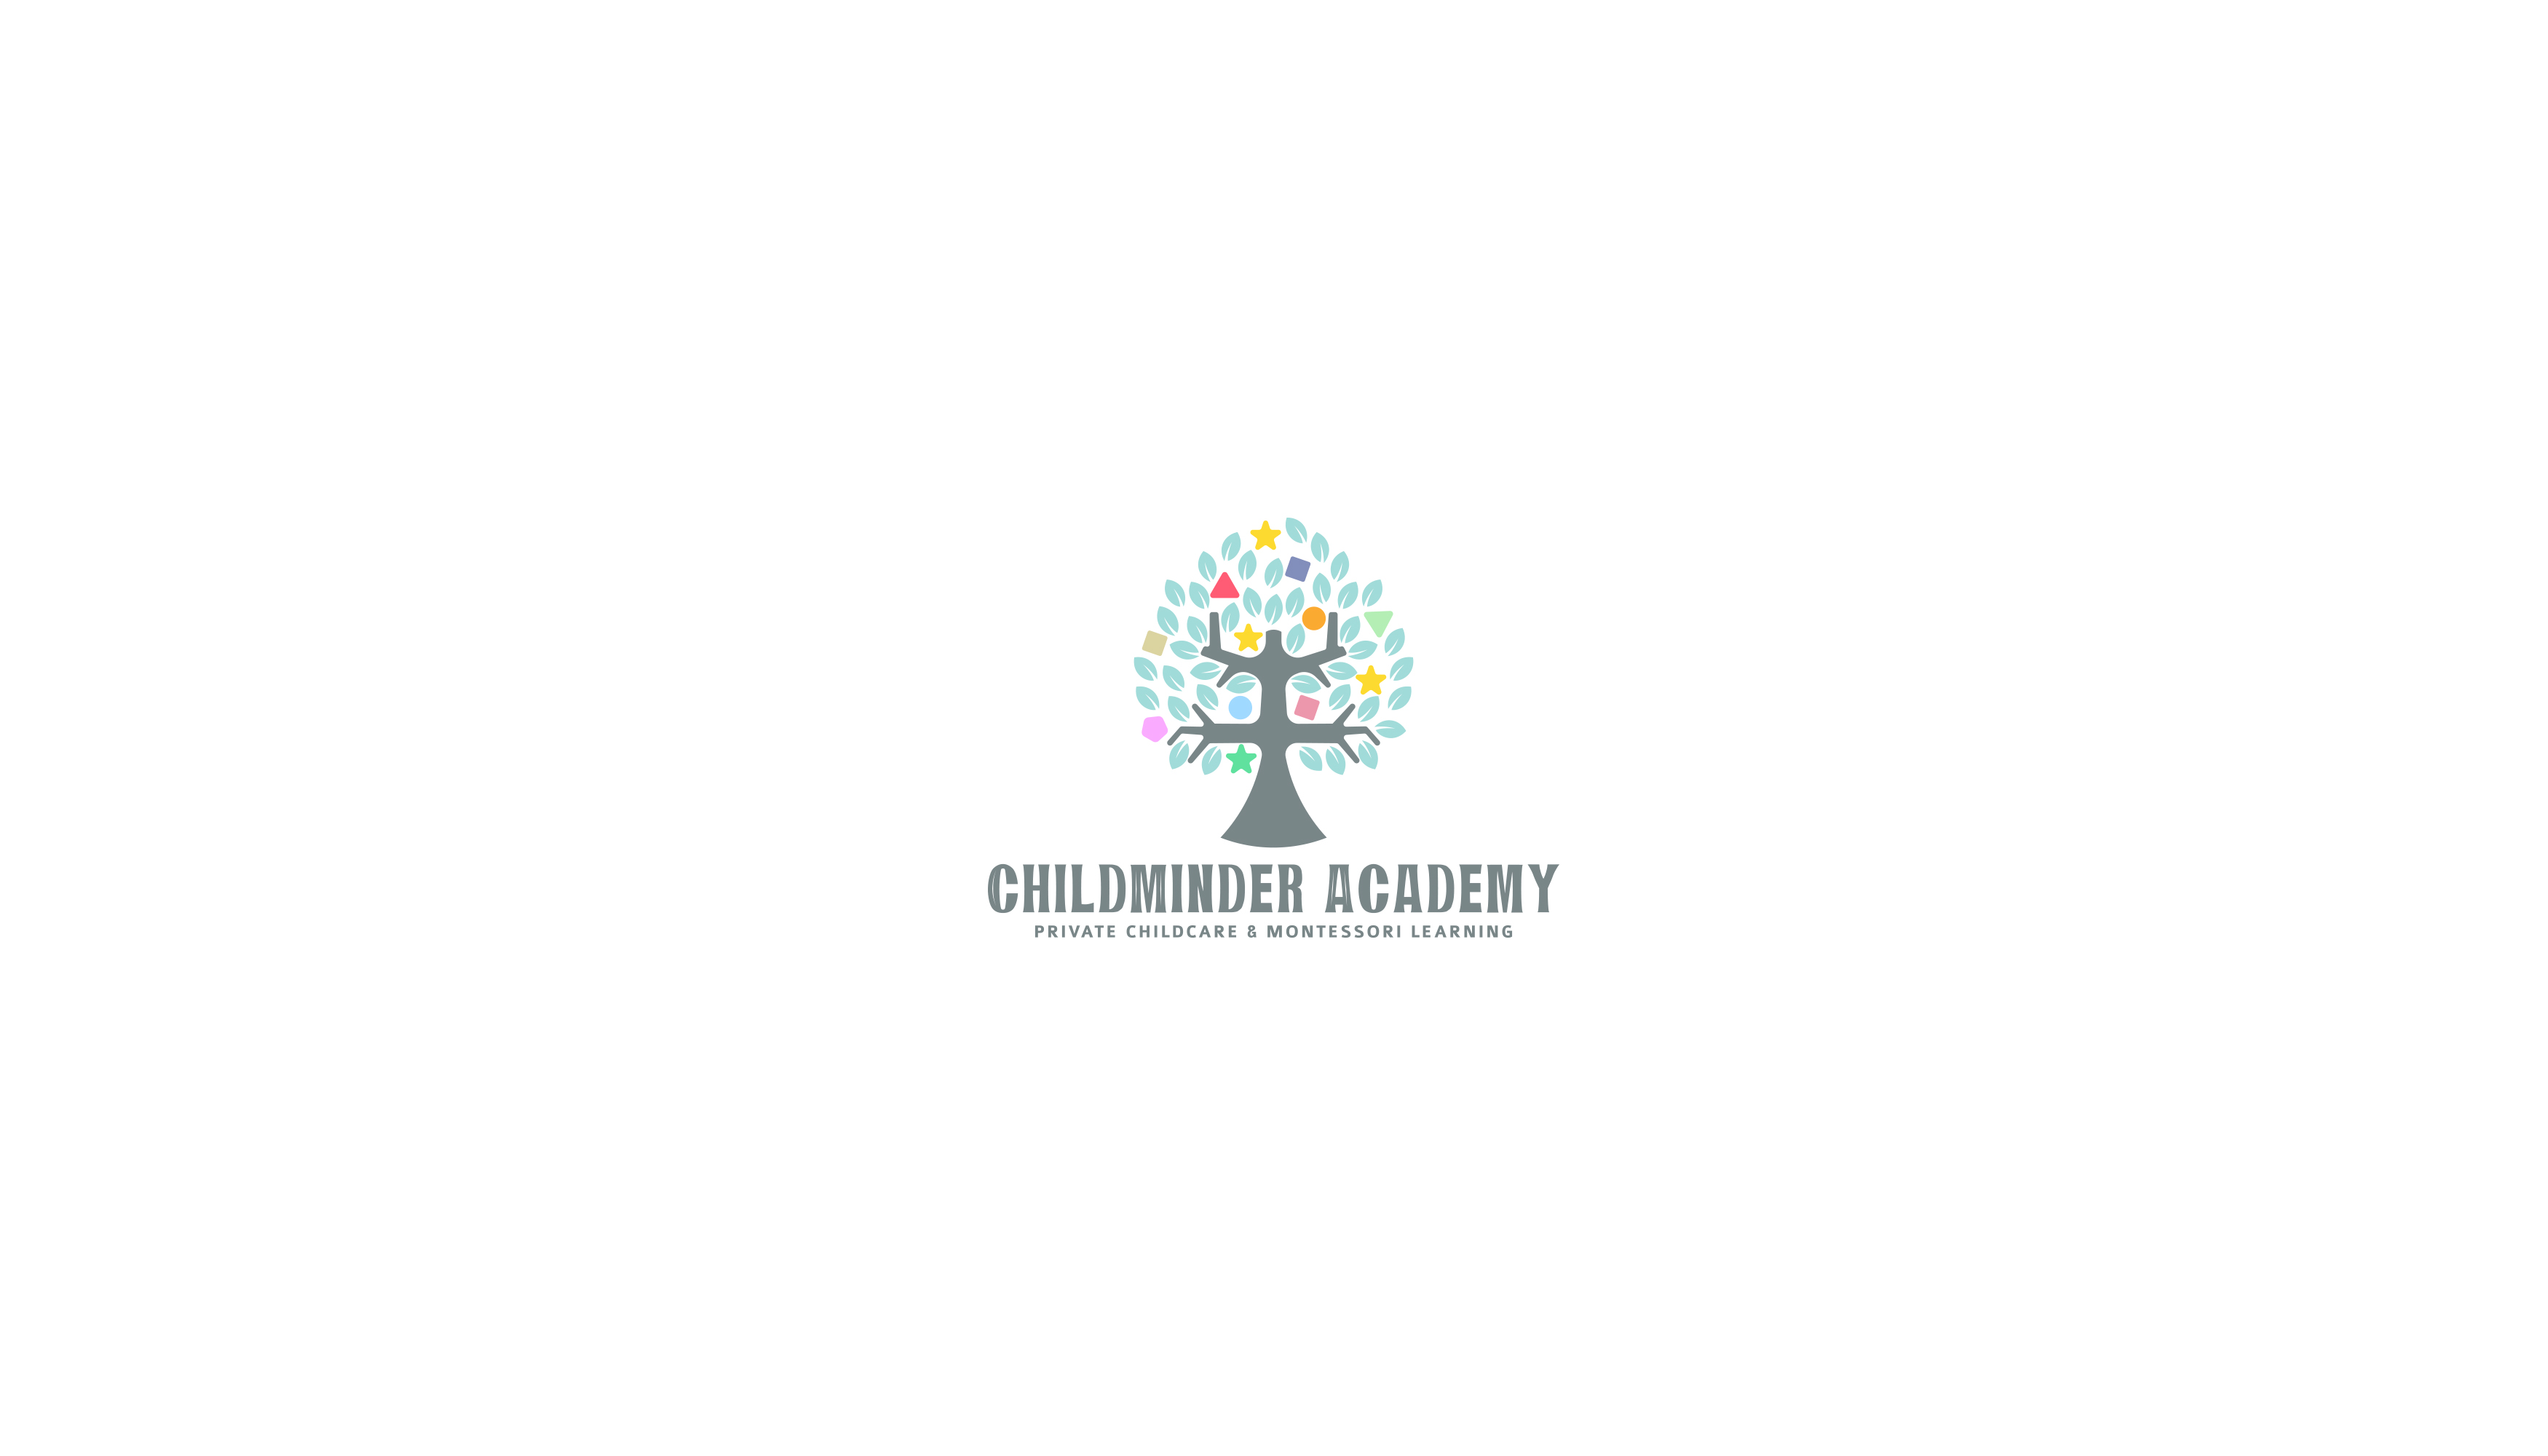 ChildMinder Academy Design #9